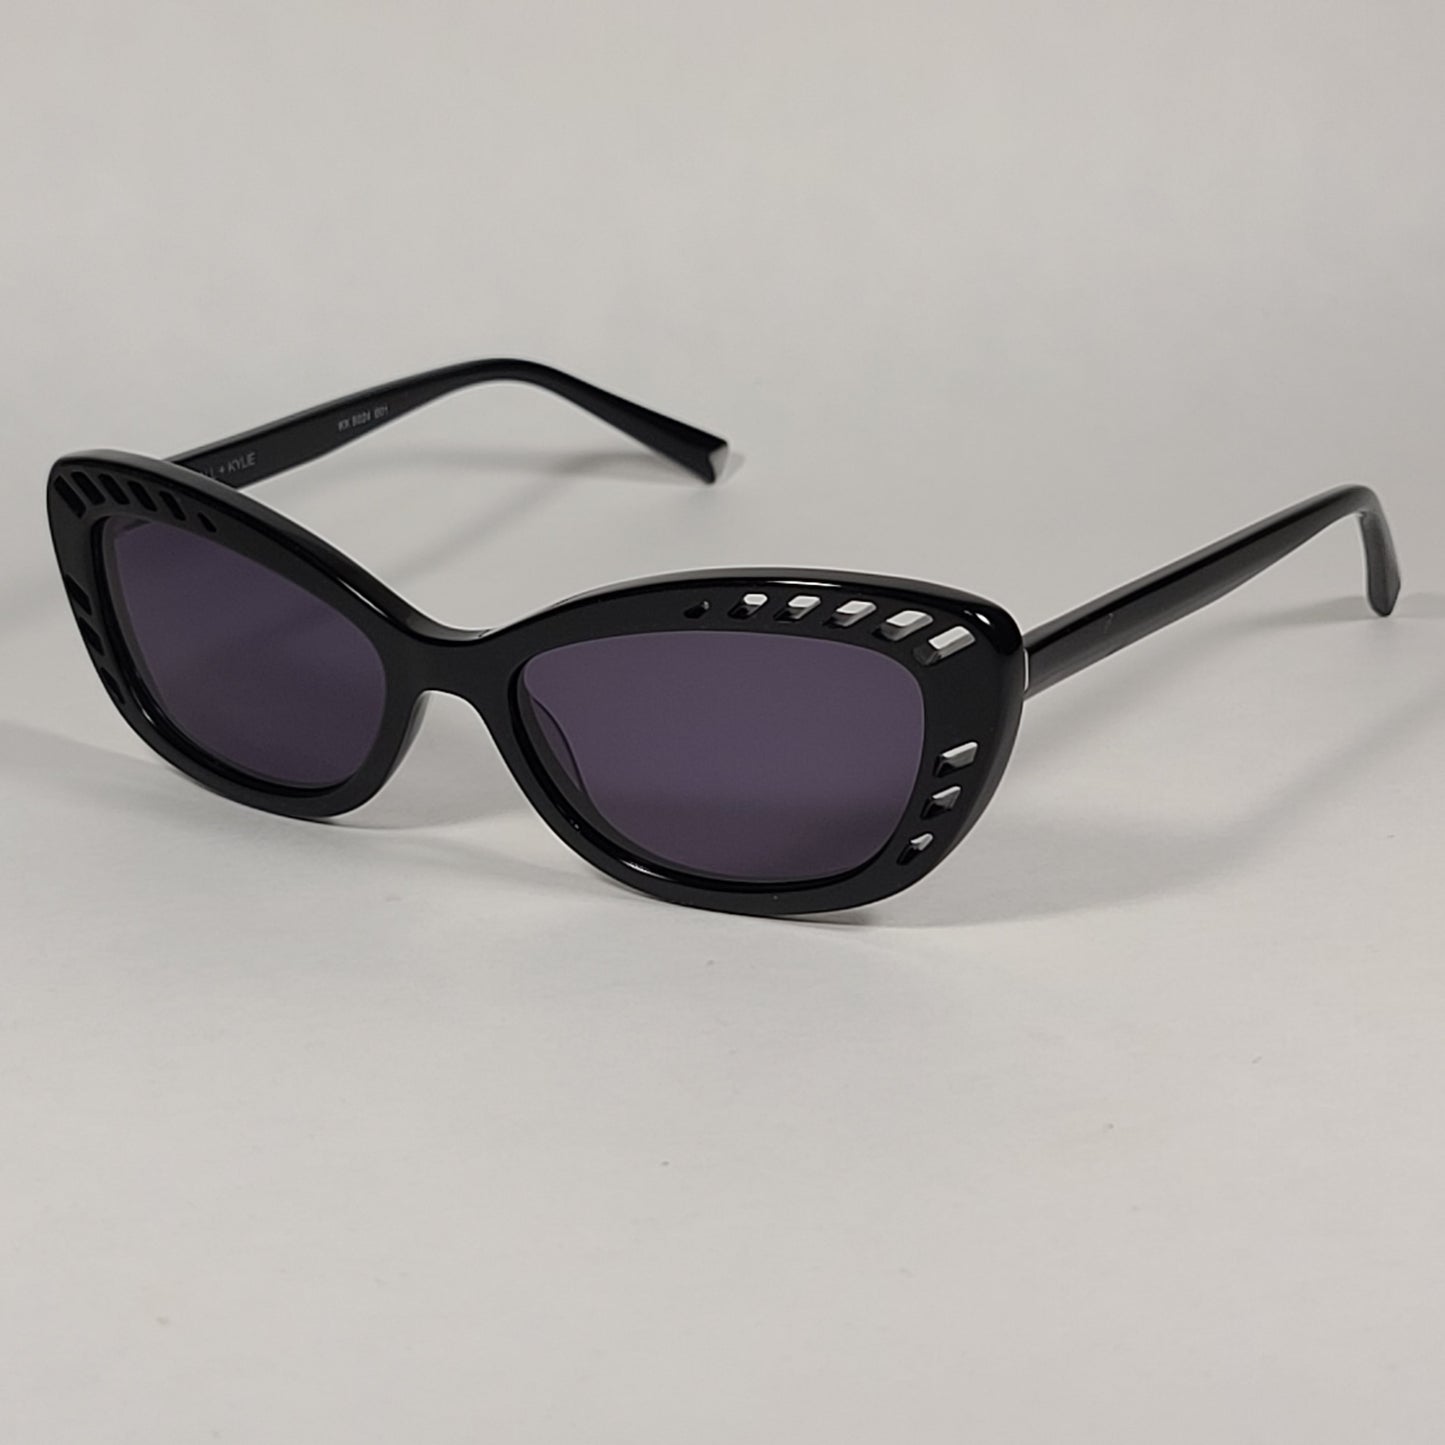 Authentic Kendall + Kylie Natalie Cat Eye Sunglasses Shiny Black Frame Gray Mono Lens KK5024 001 - Sunglasses